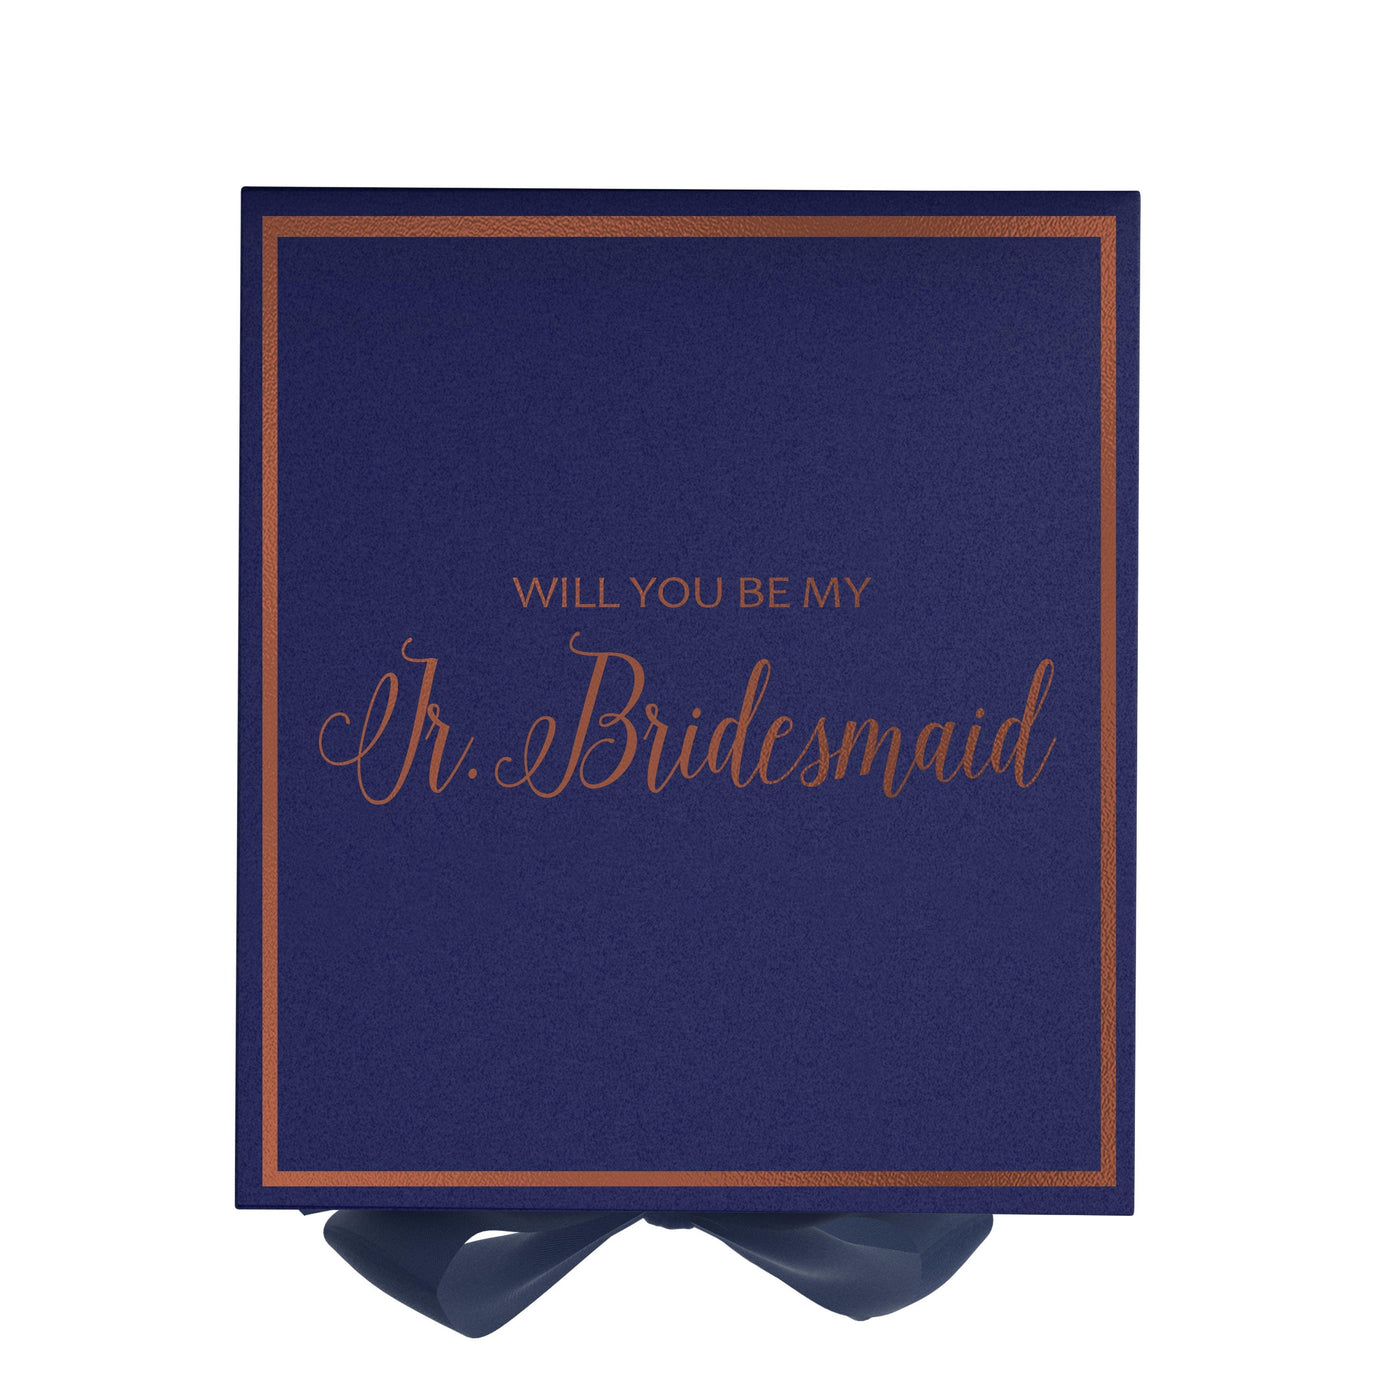 Will You Be My Jr Bridesmaid? Proposal Box Navy - Border by Tshirt Unlimited - Vysn